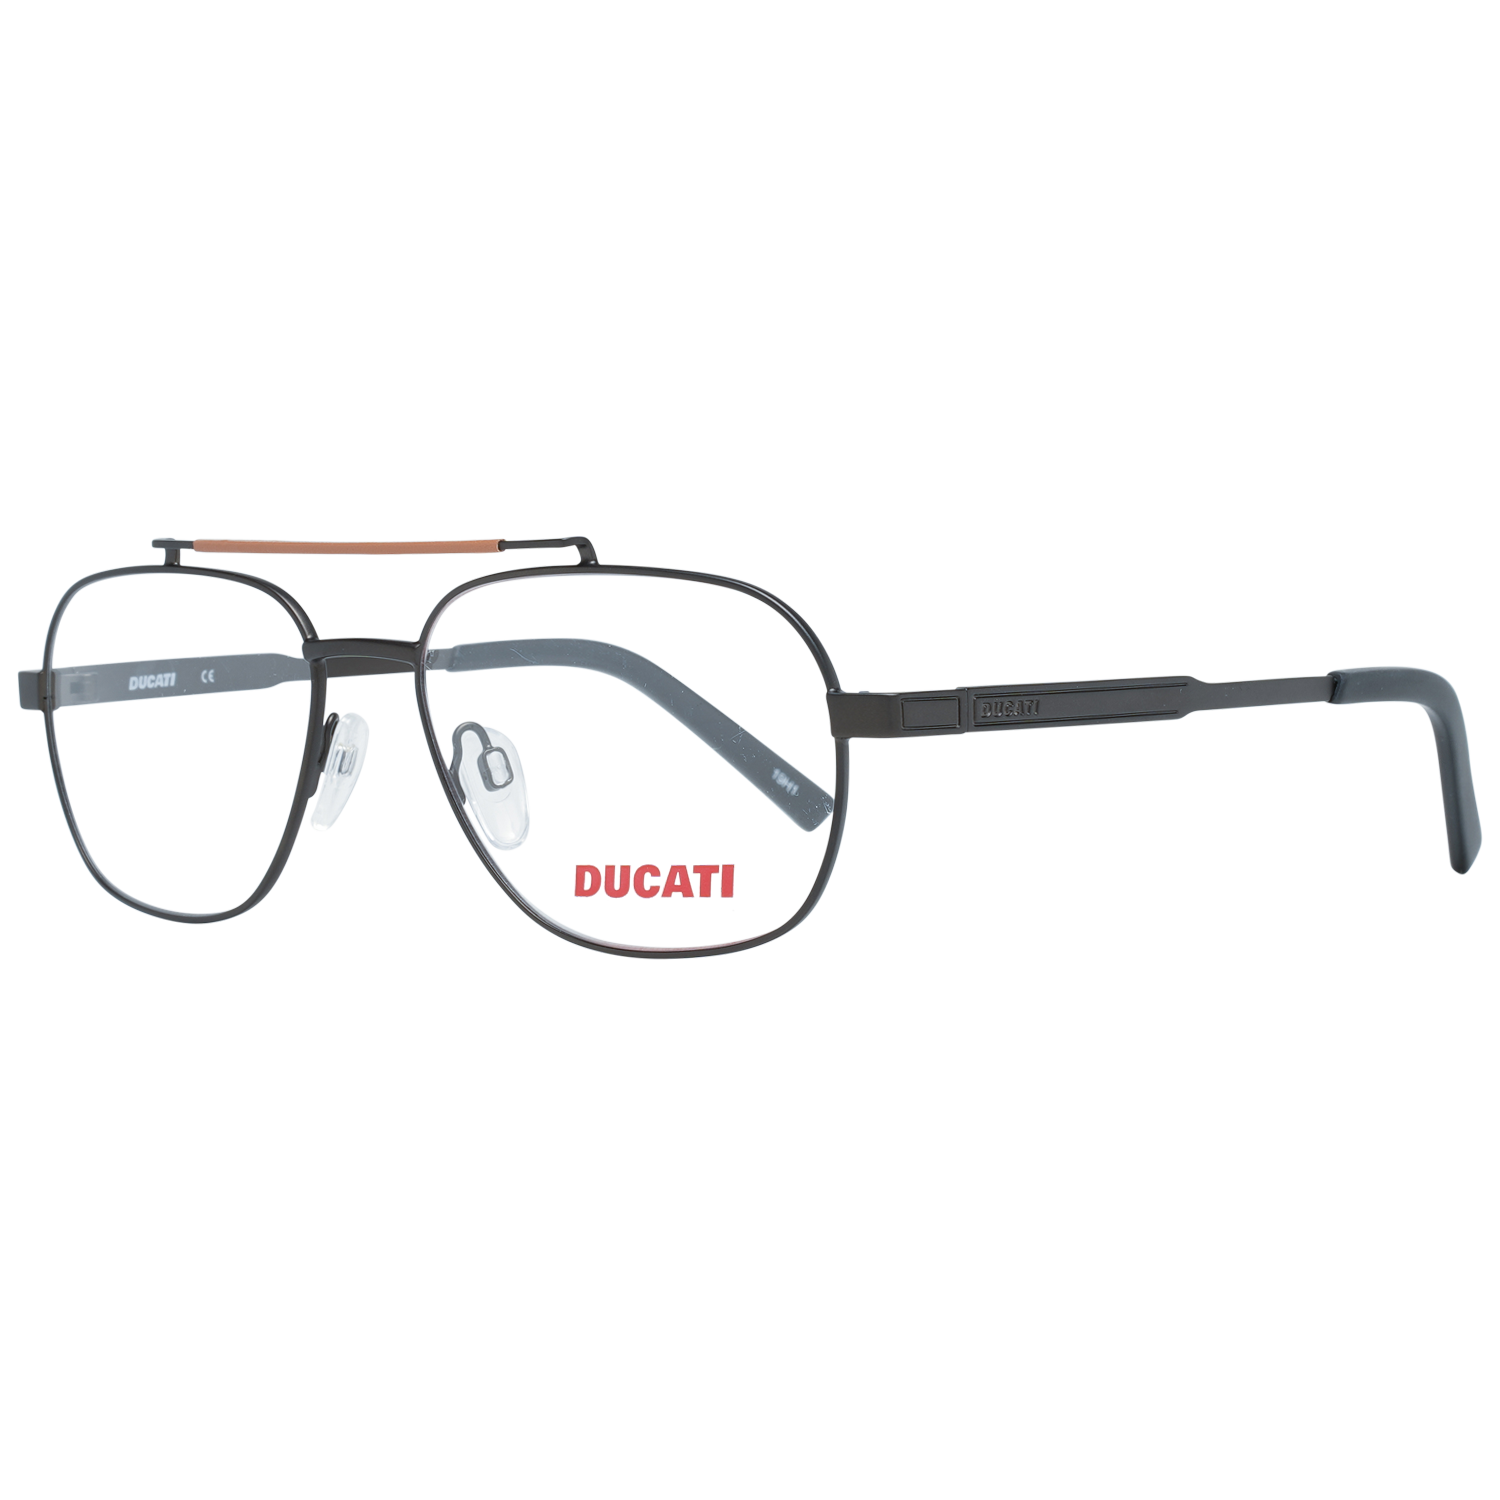 Ducati Frames Ducati Optical Frame DA3018 002 56 Eyeglasses Eyewear UK USA Australia 